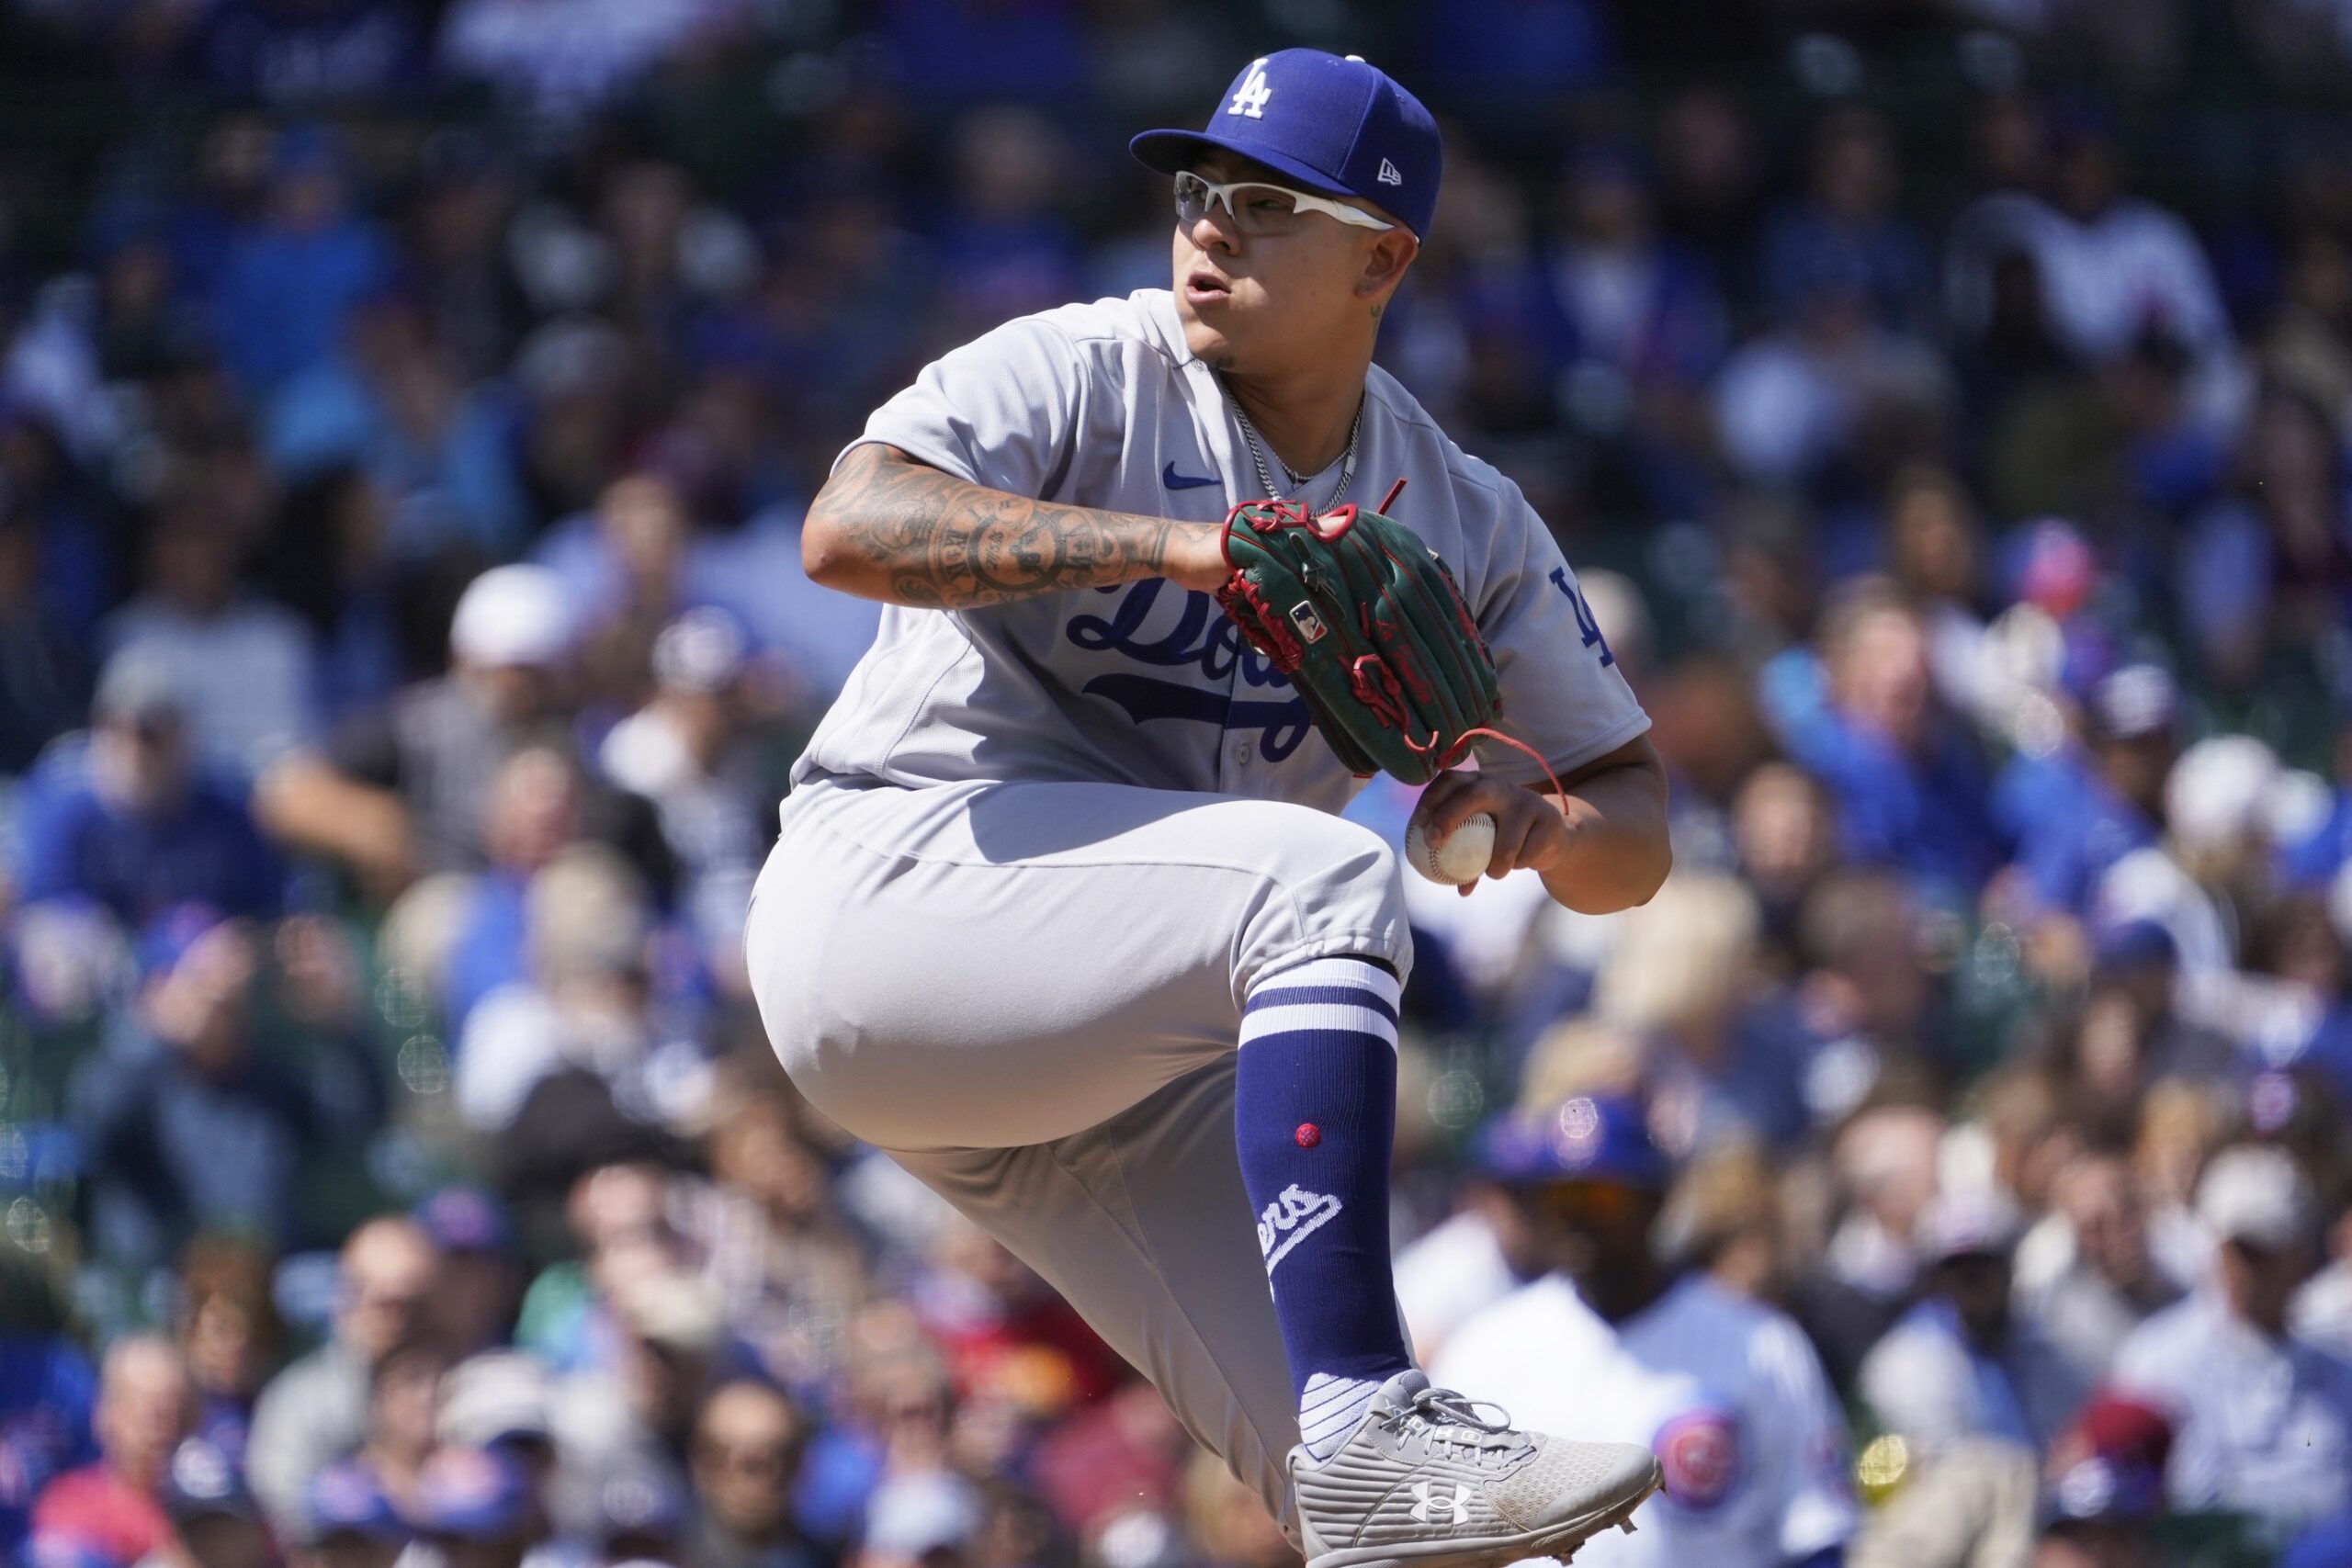 SportsNet LA on X: #Dodgers baseball returns next week! Here's a